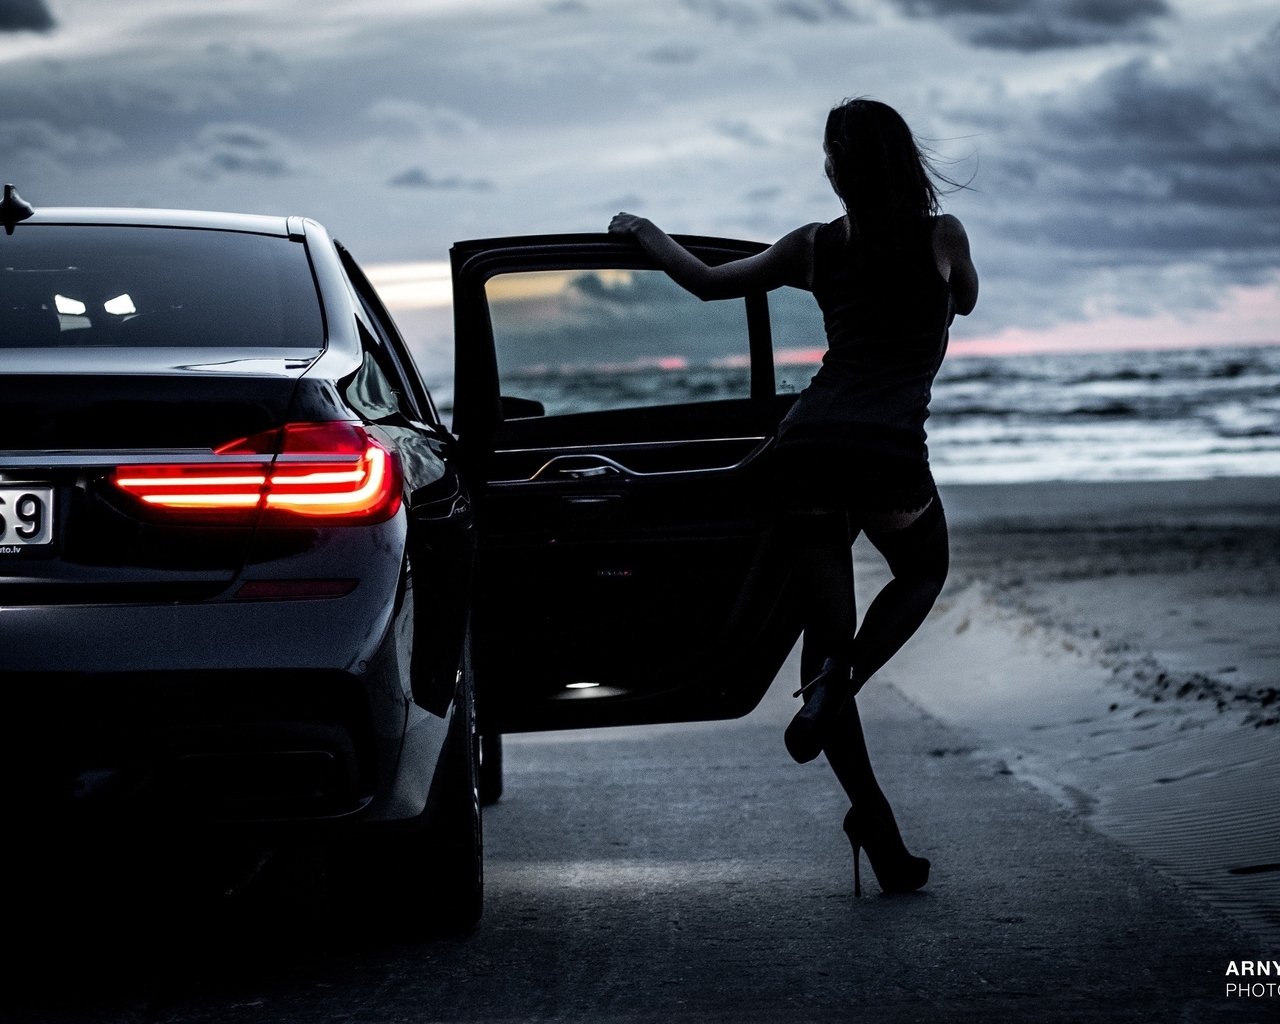 Картинка: Девушка, автомобиль, стоит, дверь, BMW, фара, тучи, пейзаж, дорога, каблуки, Arny North, Photography